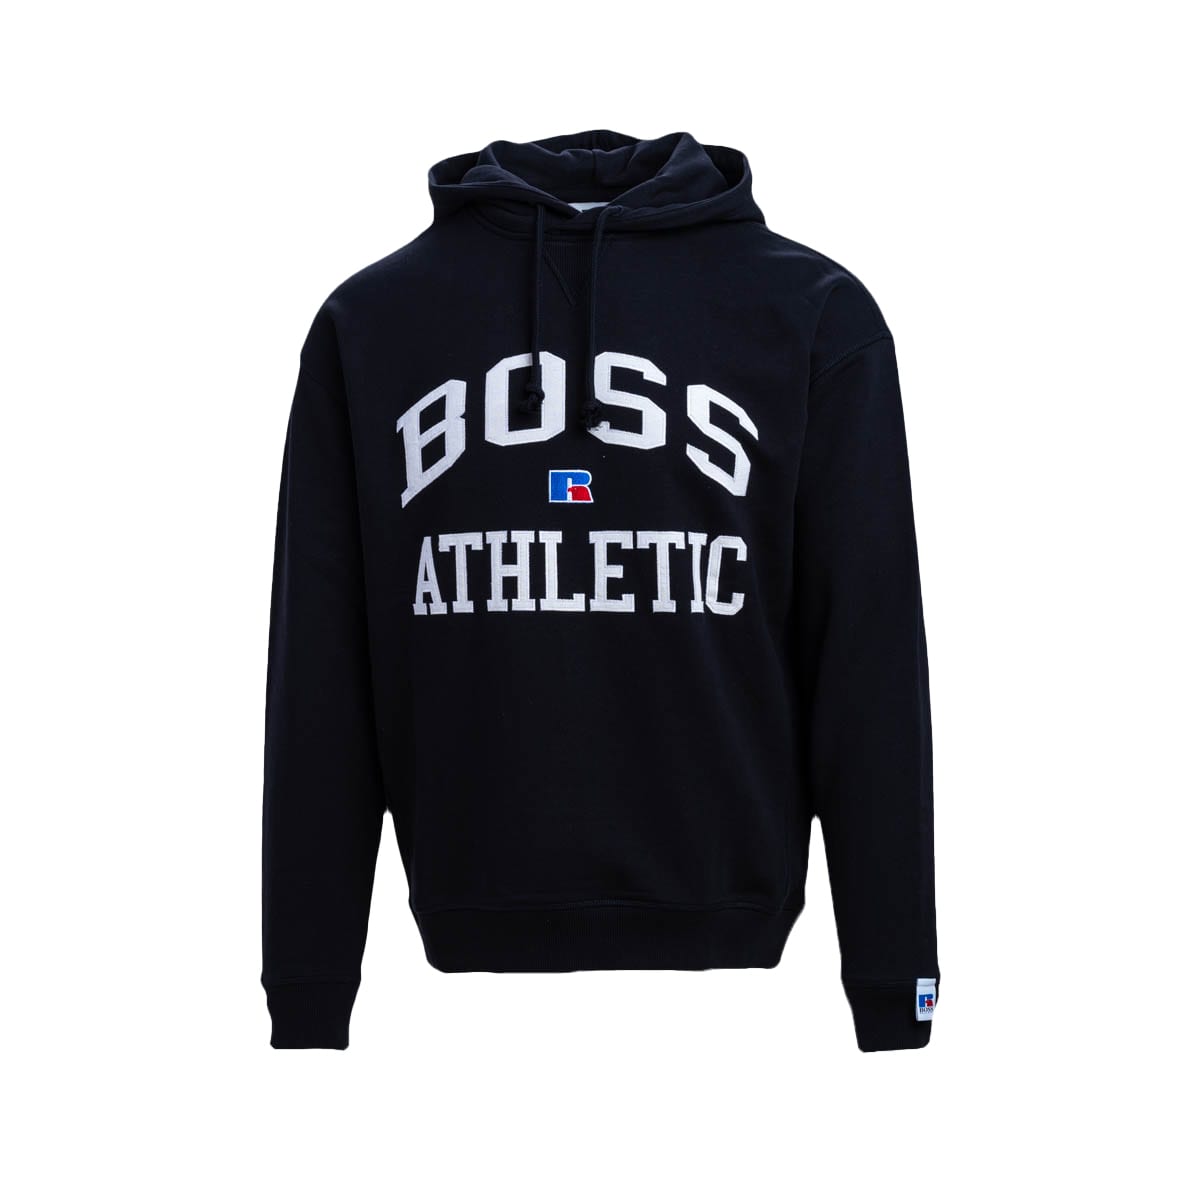 Boss X Russell Athletic Cotton Blend Sweatshirt